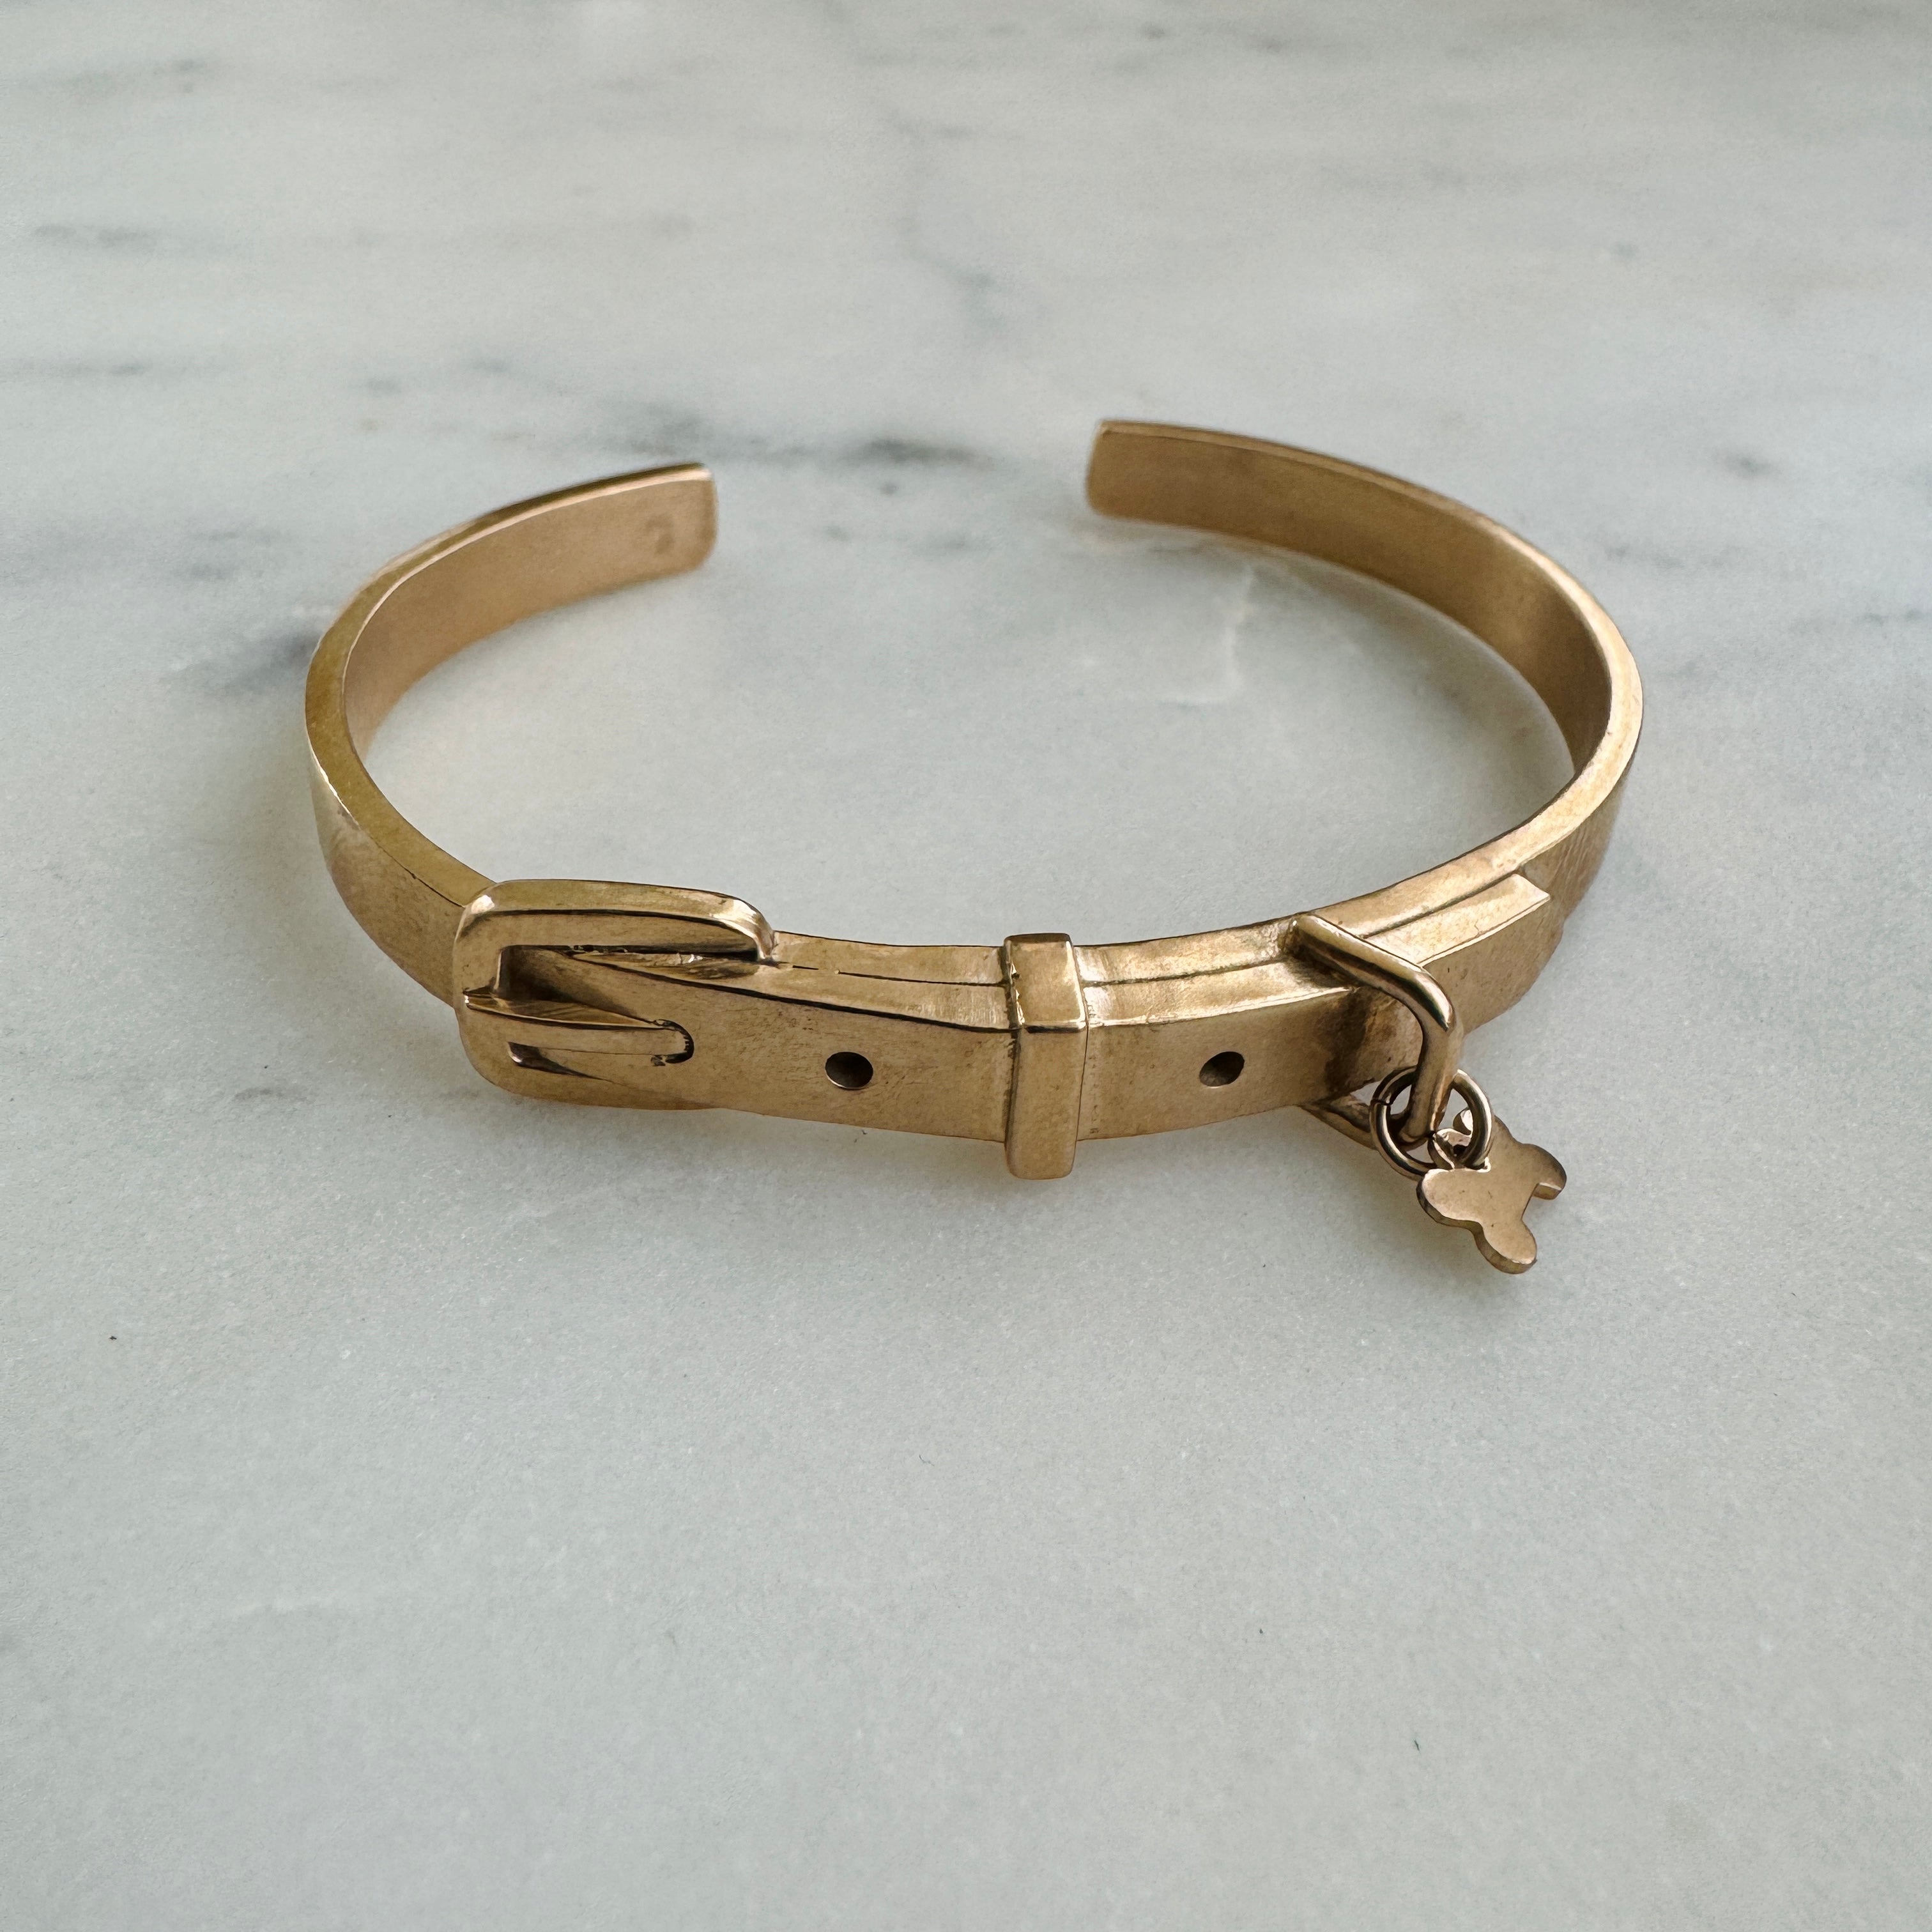 21st Anniversary Bracelet For Her – Garden's Gate Jewelry